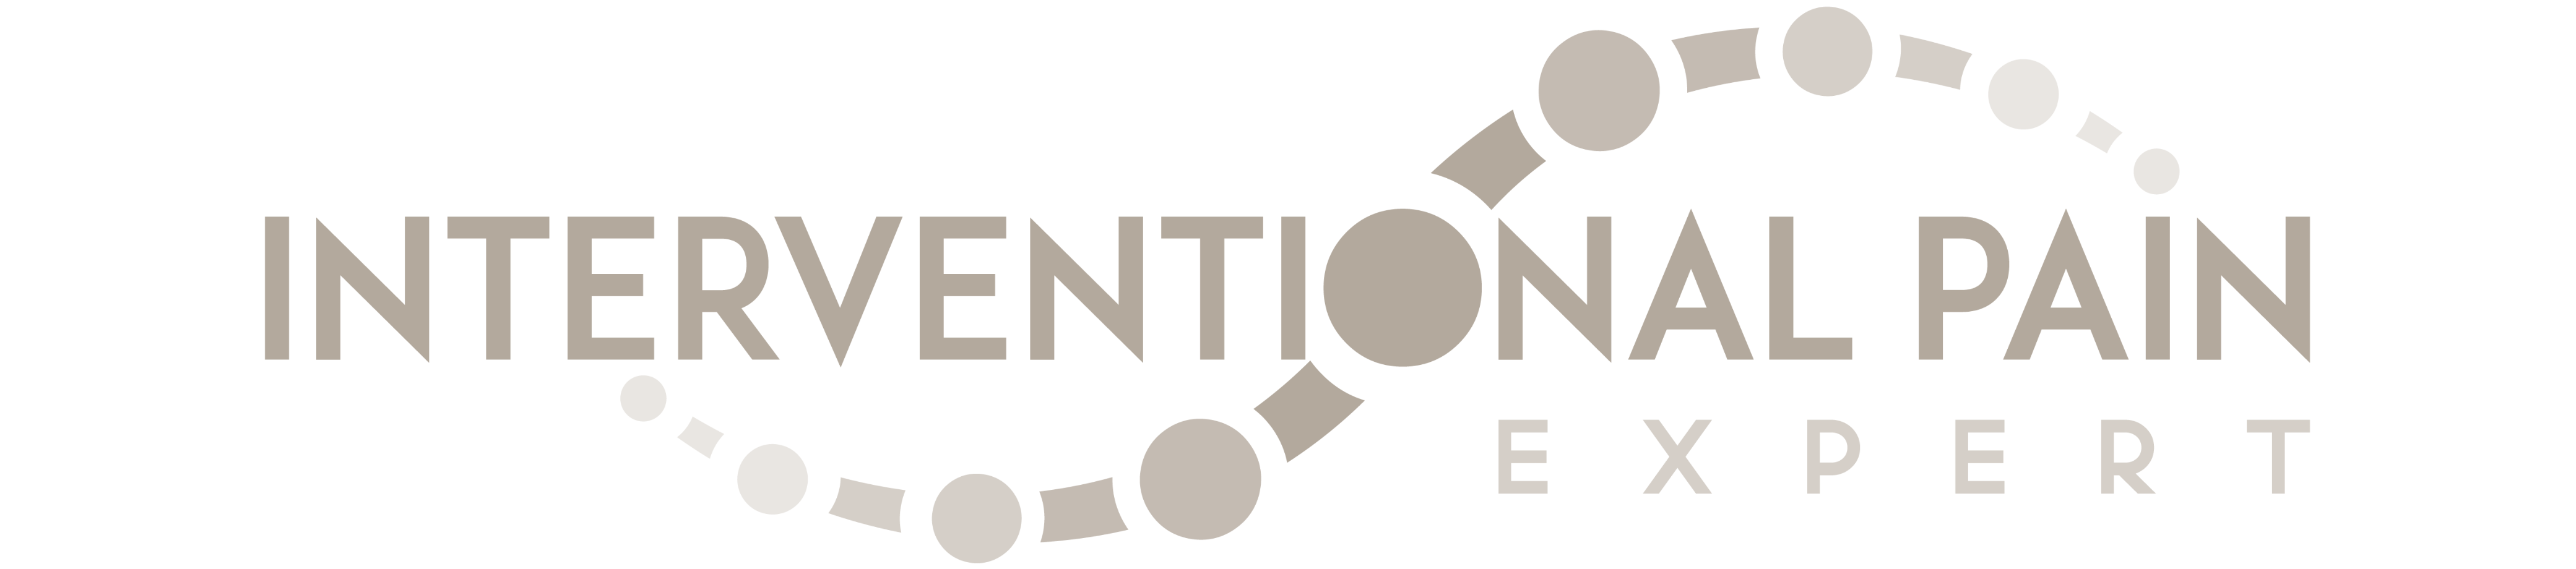 interventional pain expert logo